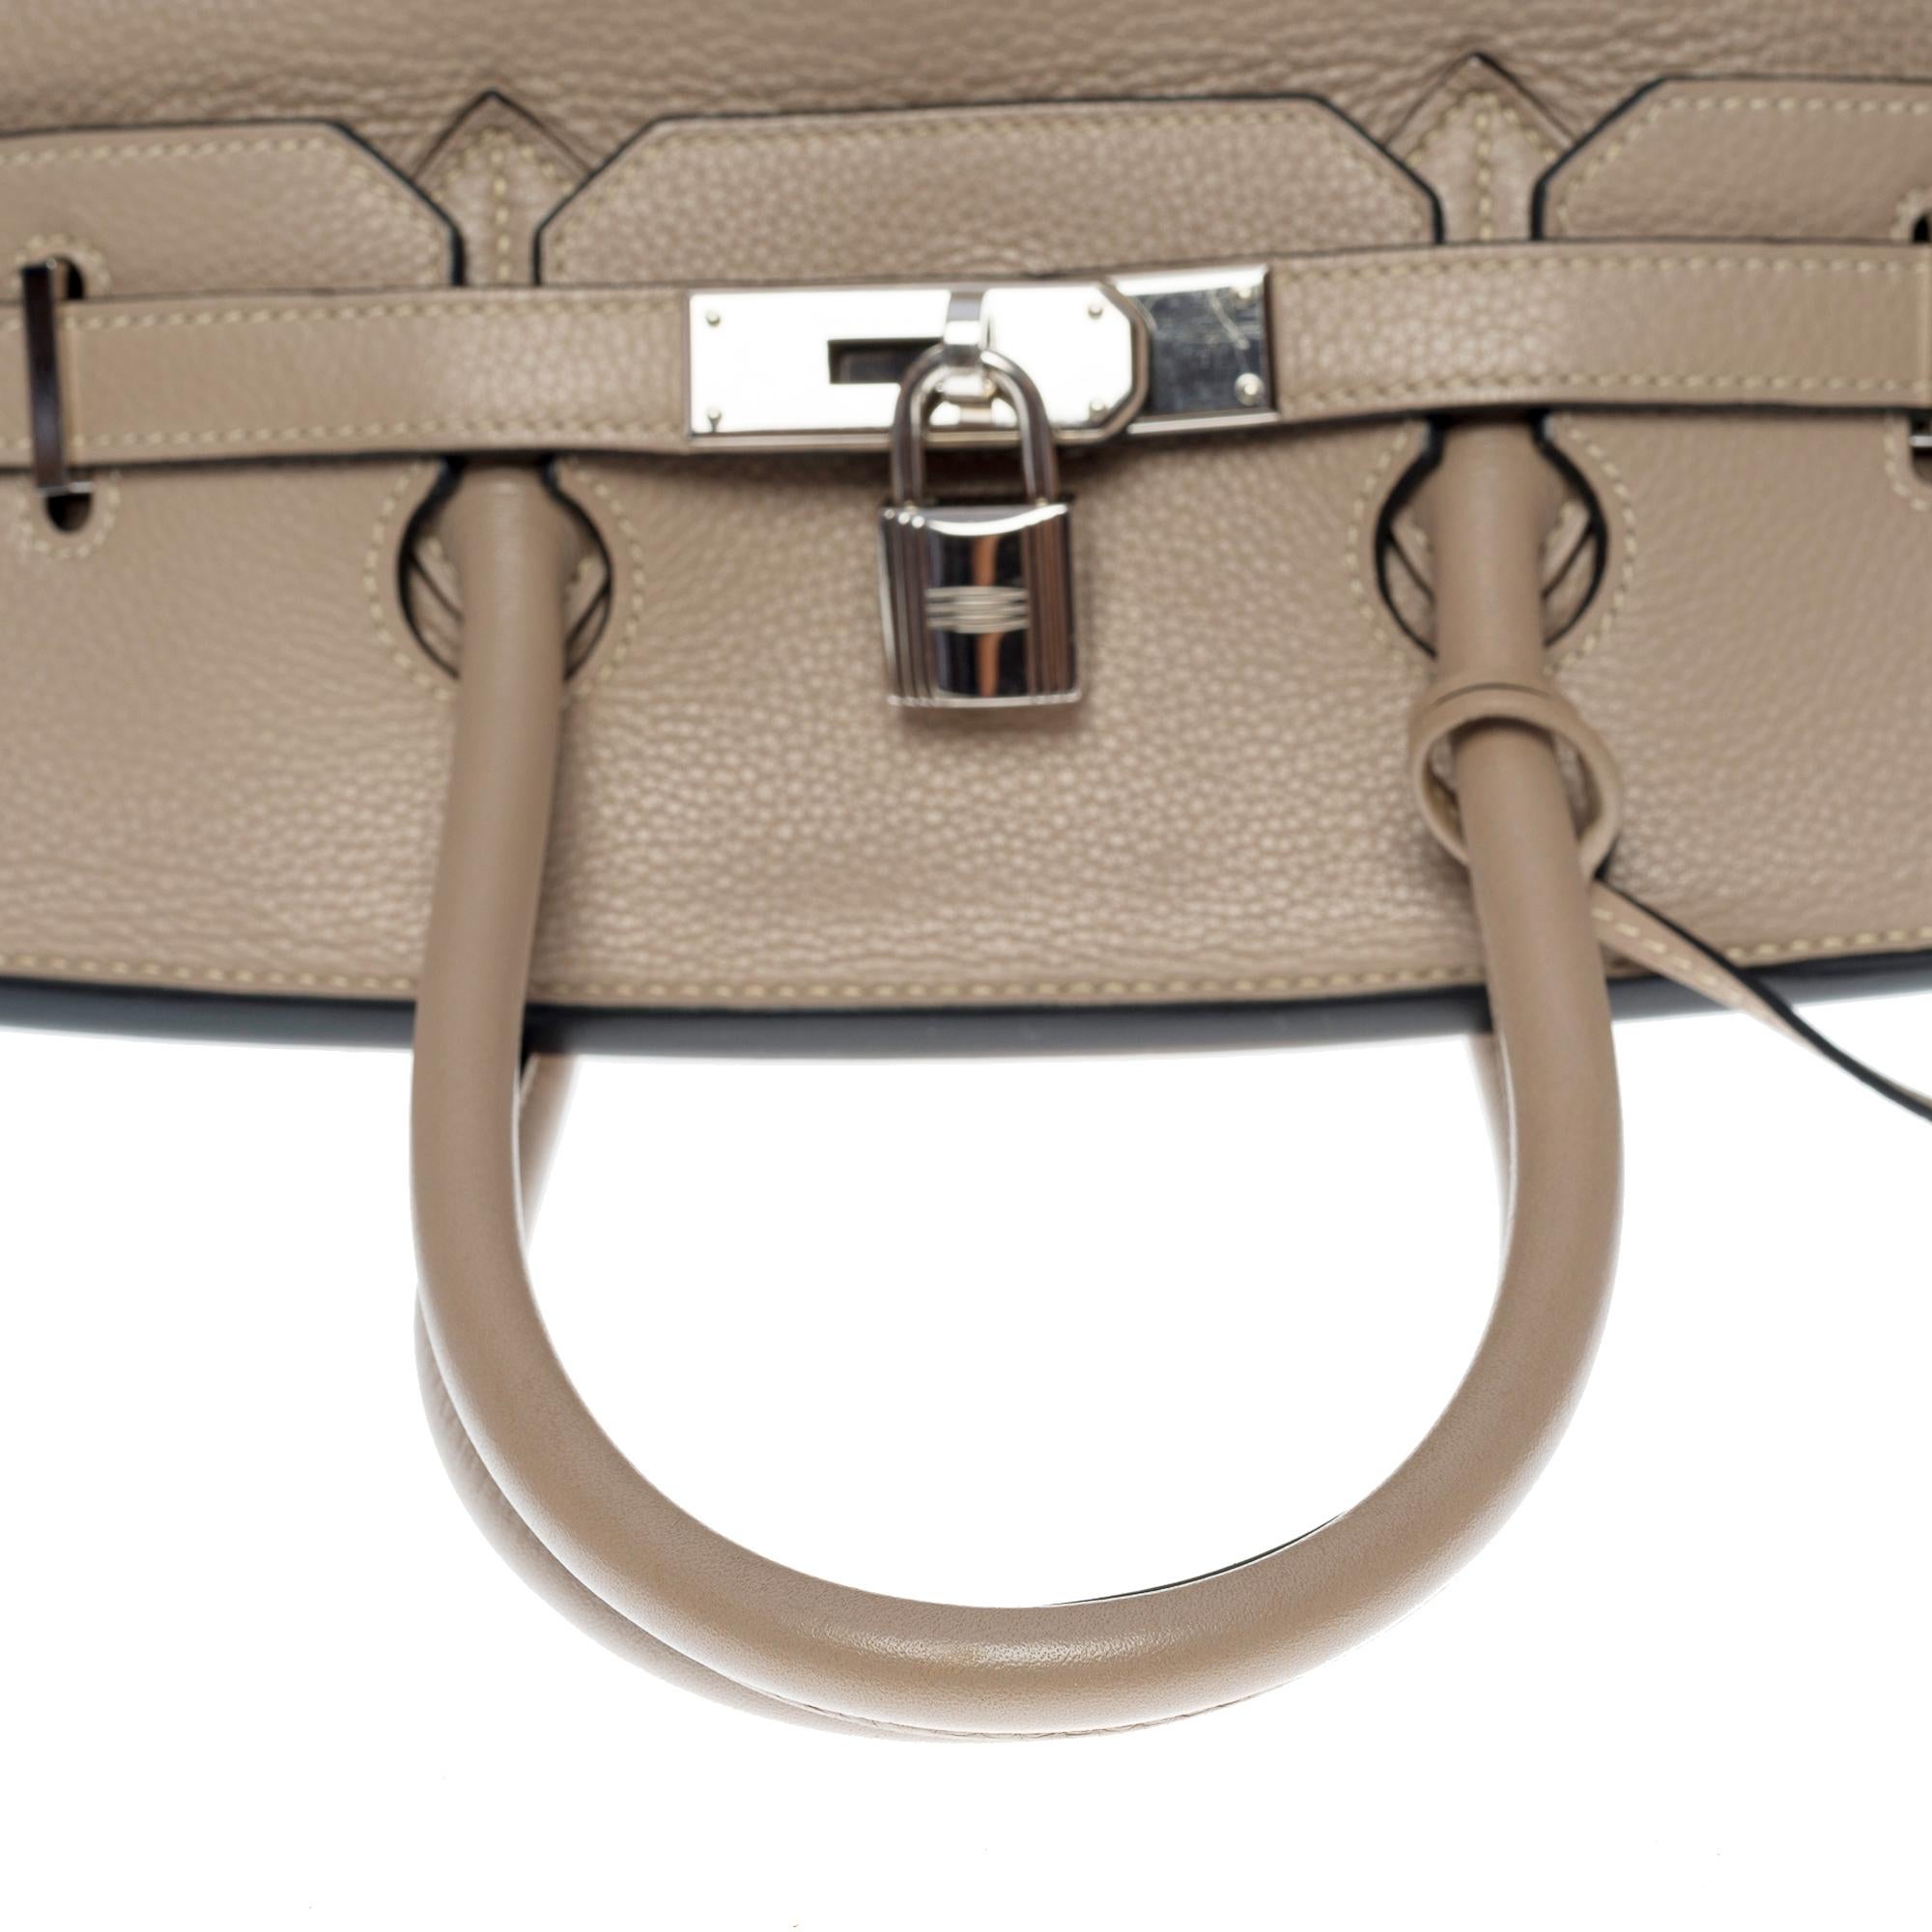 Superb Hermes Birkin 35 cm handbag in dove gray Togo leather, SHW 6